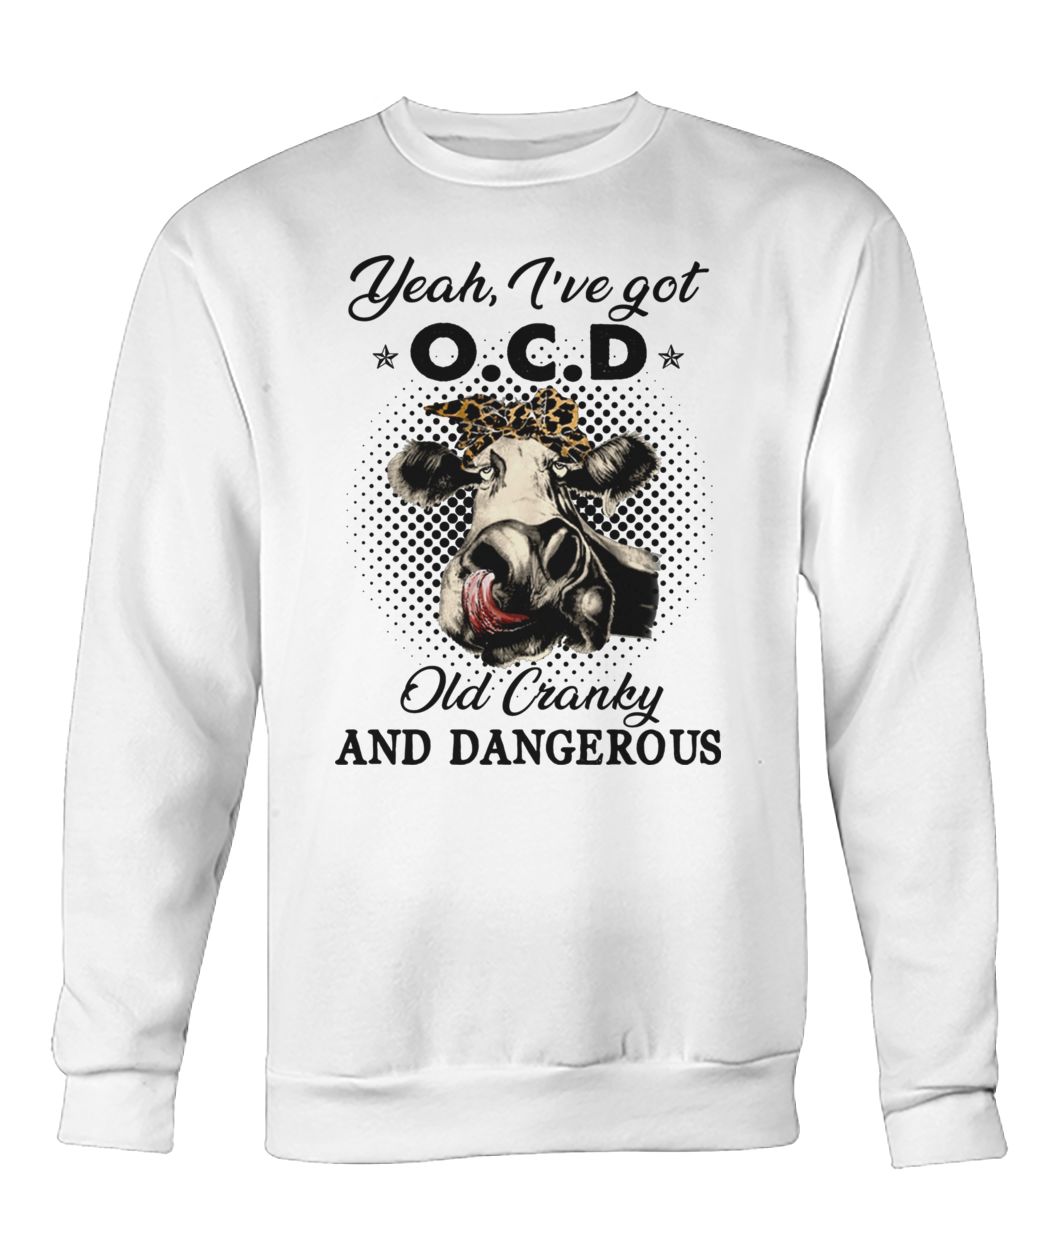 I've got ocd old cranky and dangerous heifer farmer sweatshirt